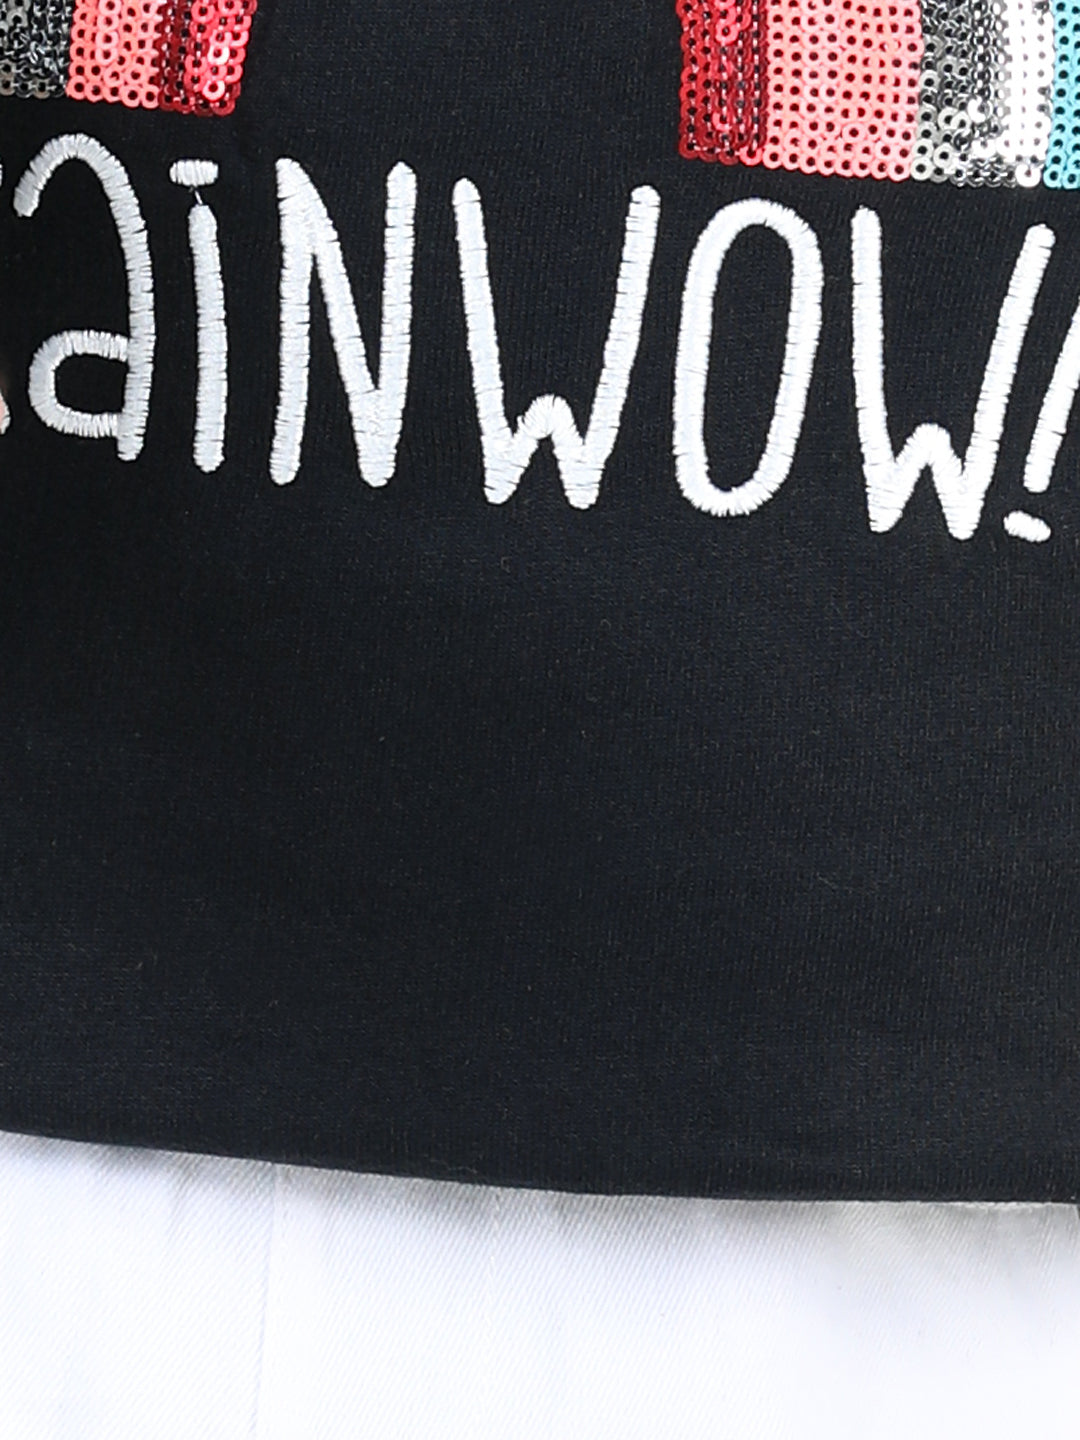 BownBee Full Sleeve Sweatshirt for Girls- Black